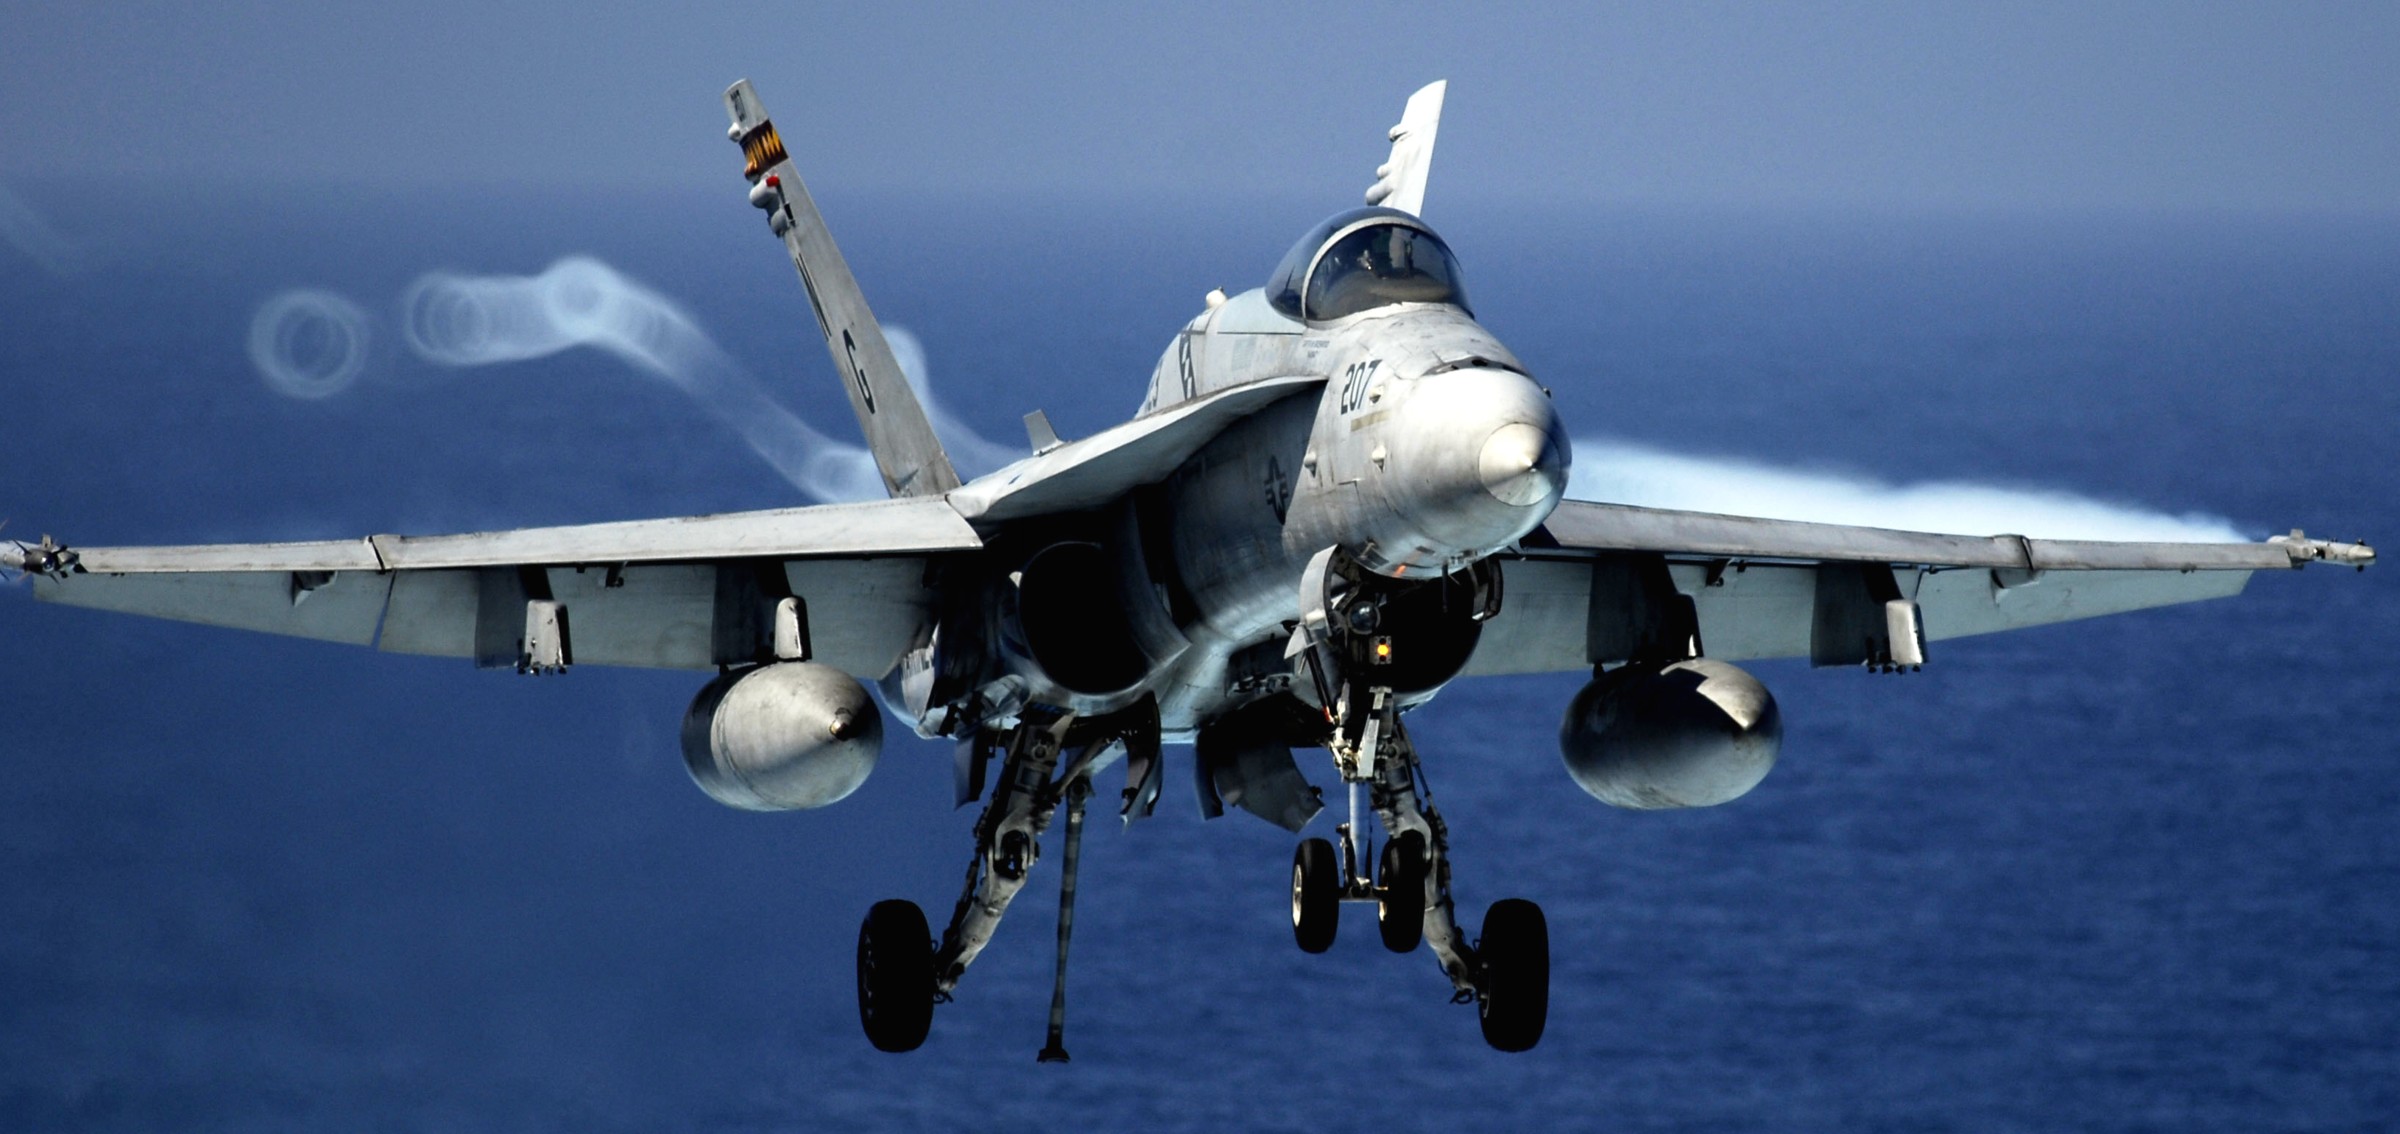 vmfa-323 death rattlers marine fighter attack squadron f/a-18c hornet cvw-9 uss john c. stennis cvn-74 94